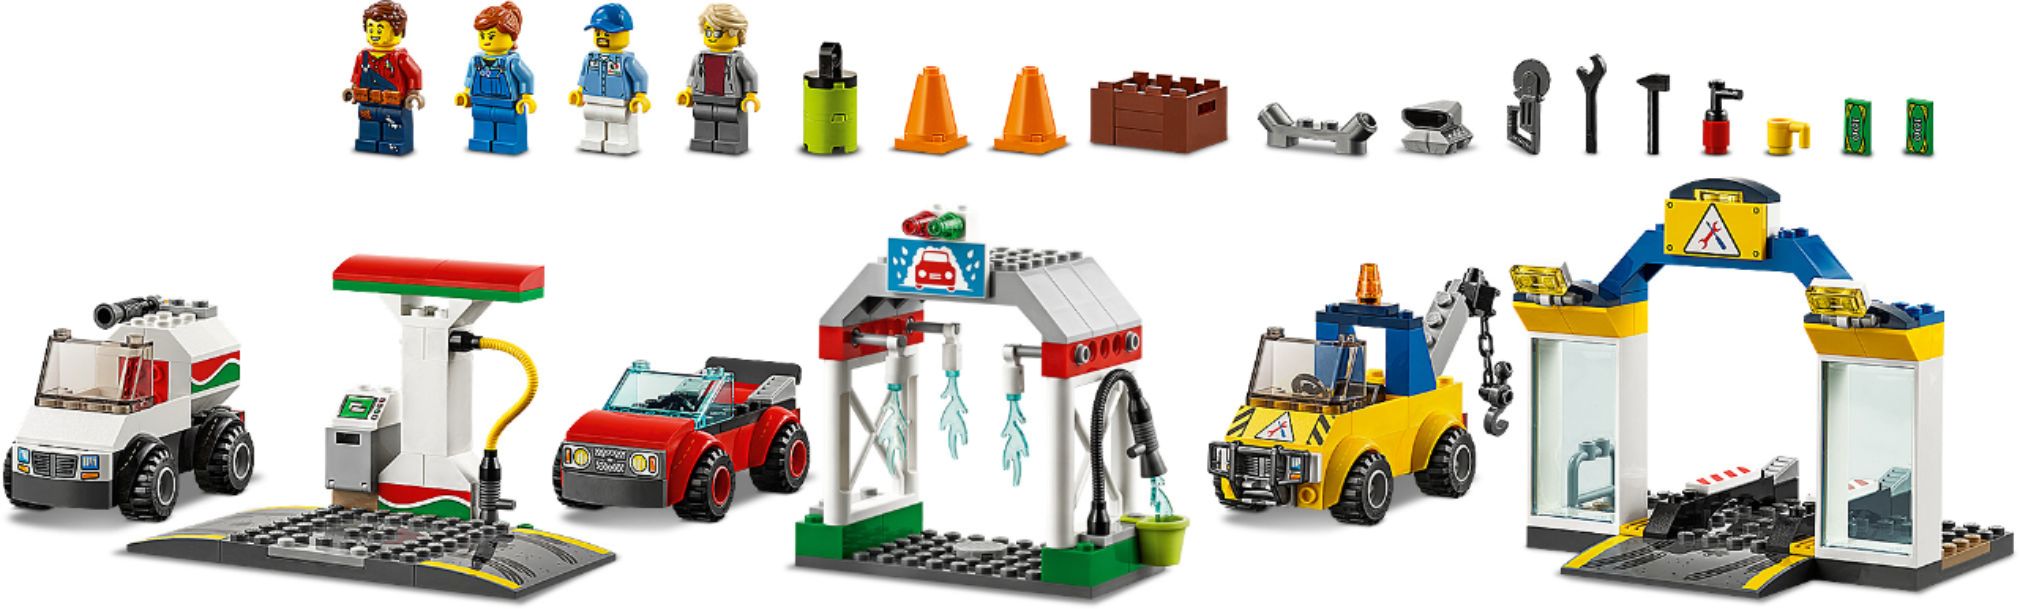 LEGO® CITY 60232 Garage Center pieces) – AESOP'S FABLE